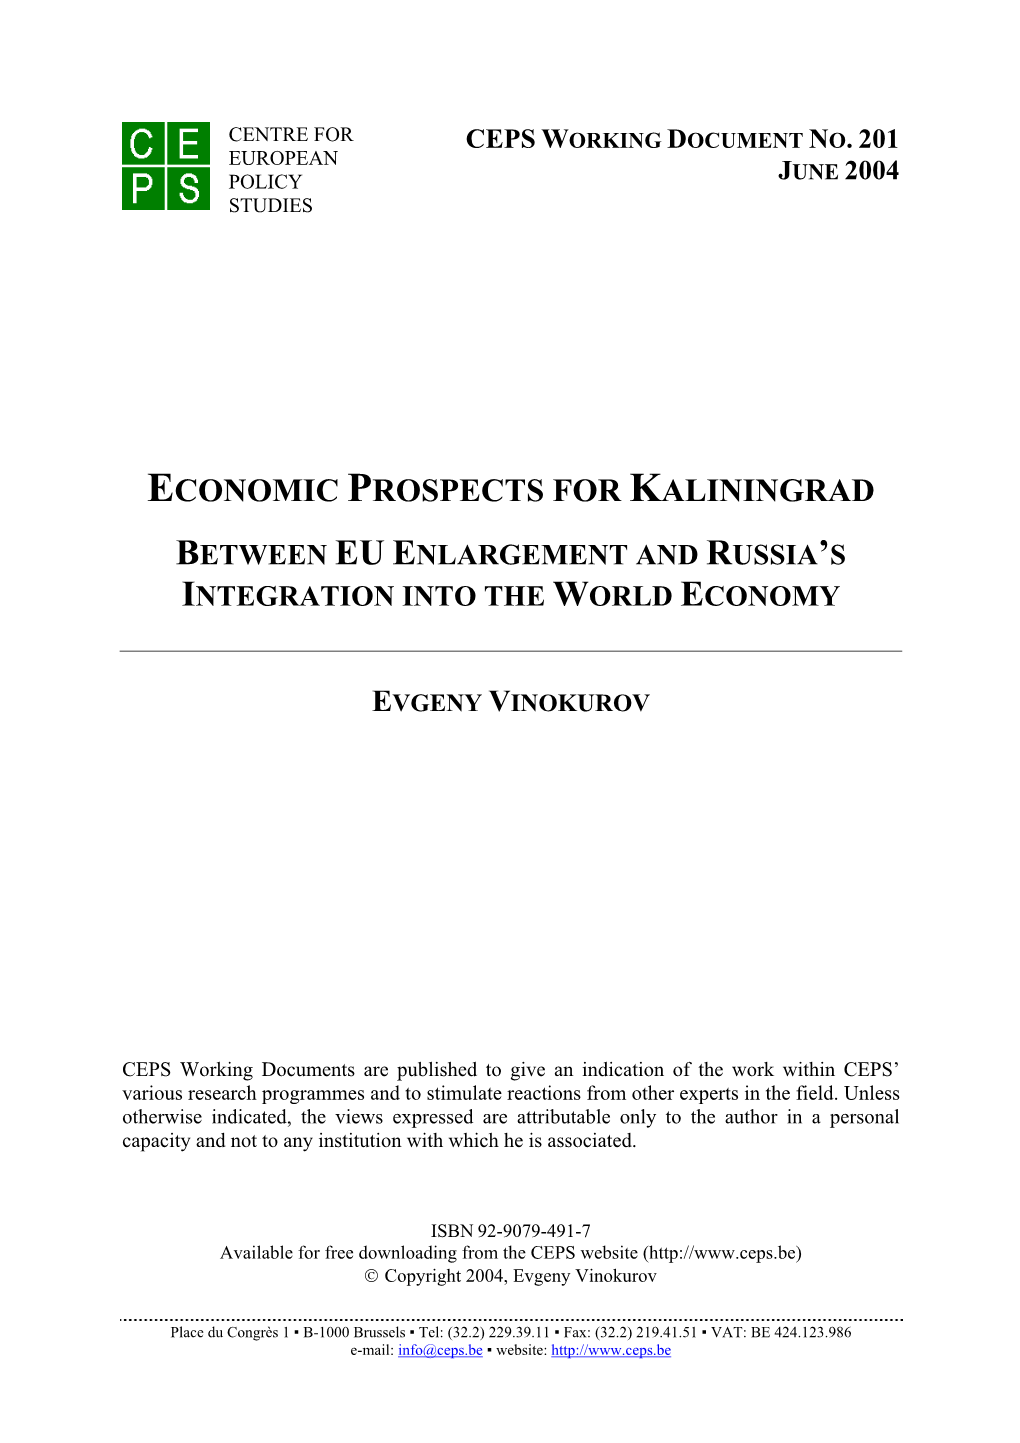 Economic Prospects for Kaliningrad